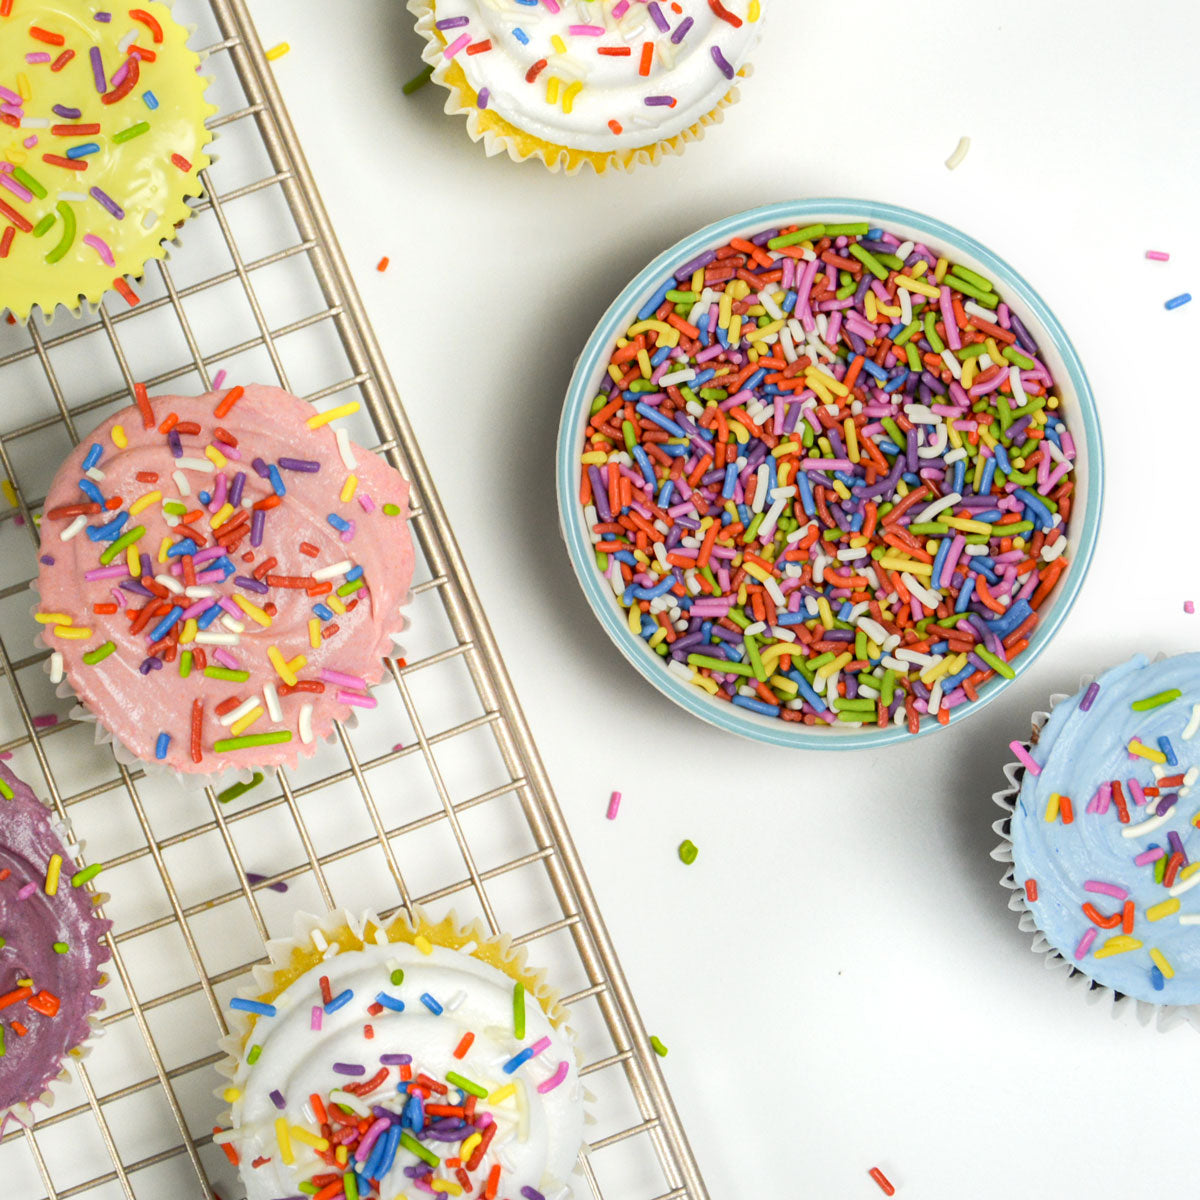 All natural rainbow sprinkles on cupcakes